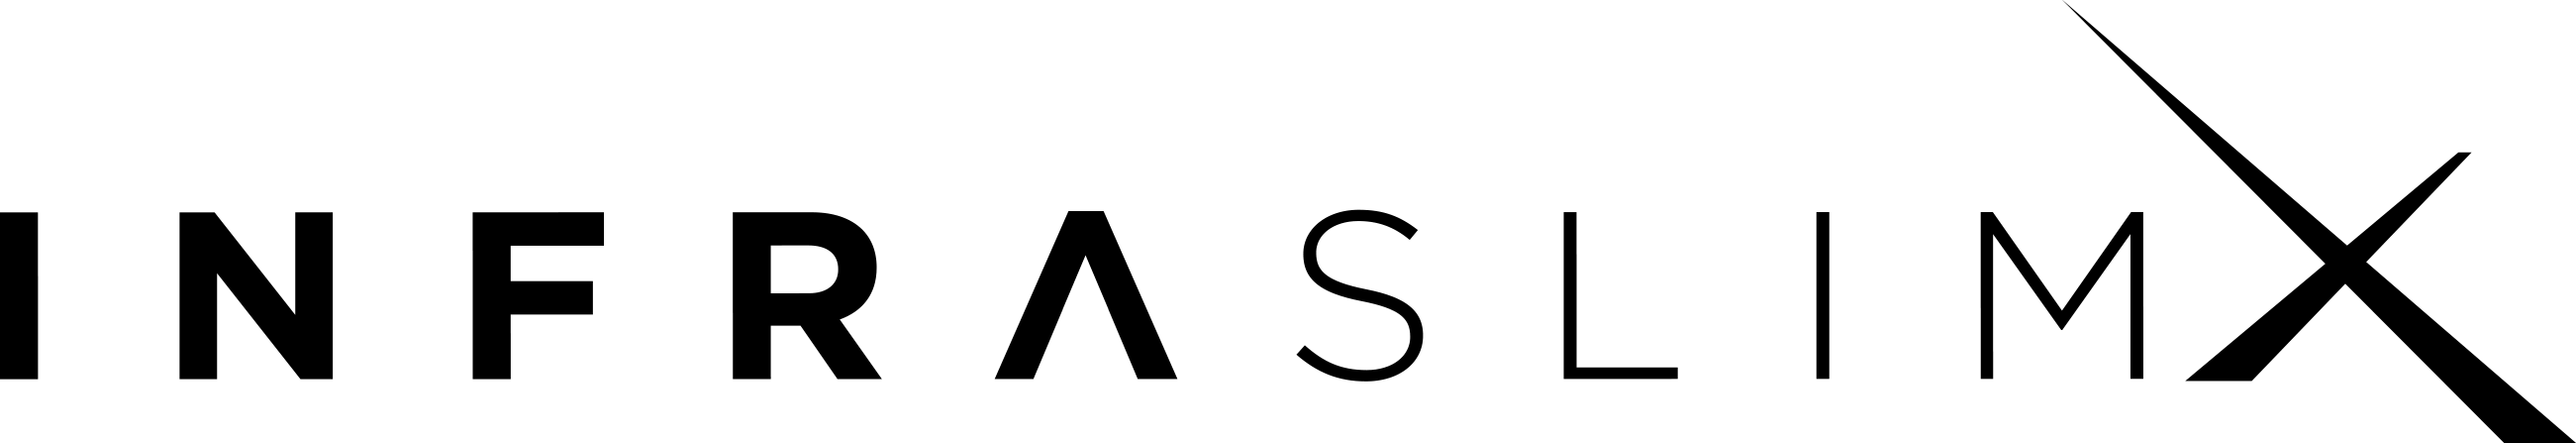 logo InfraslimX